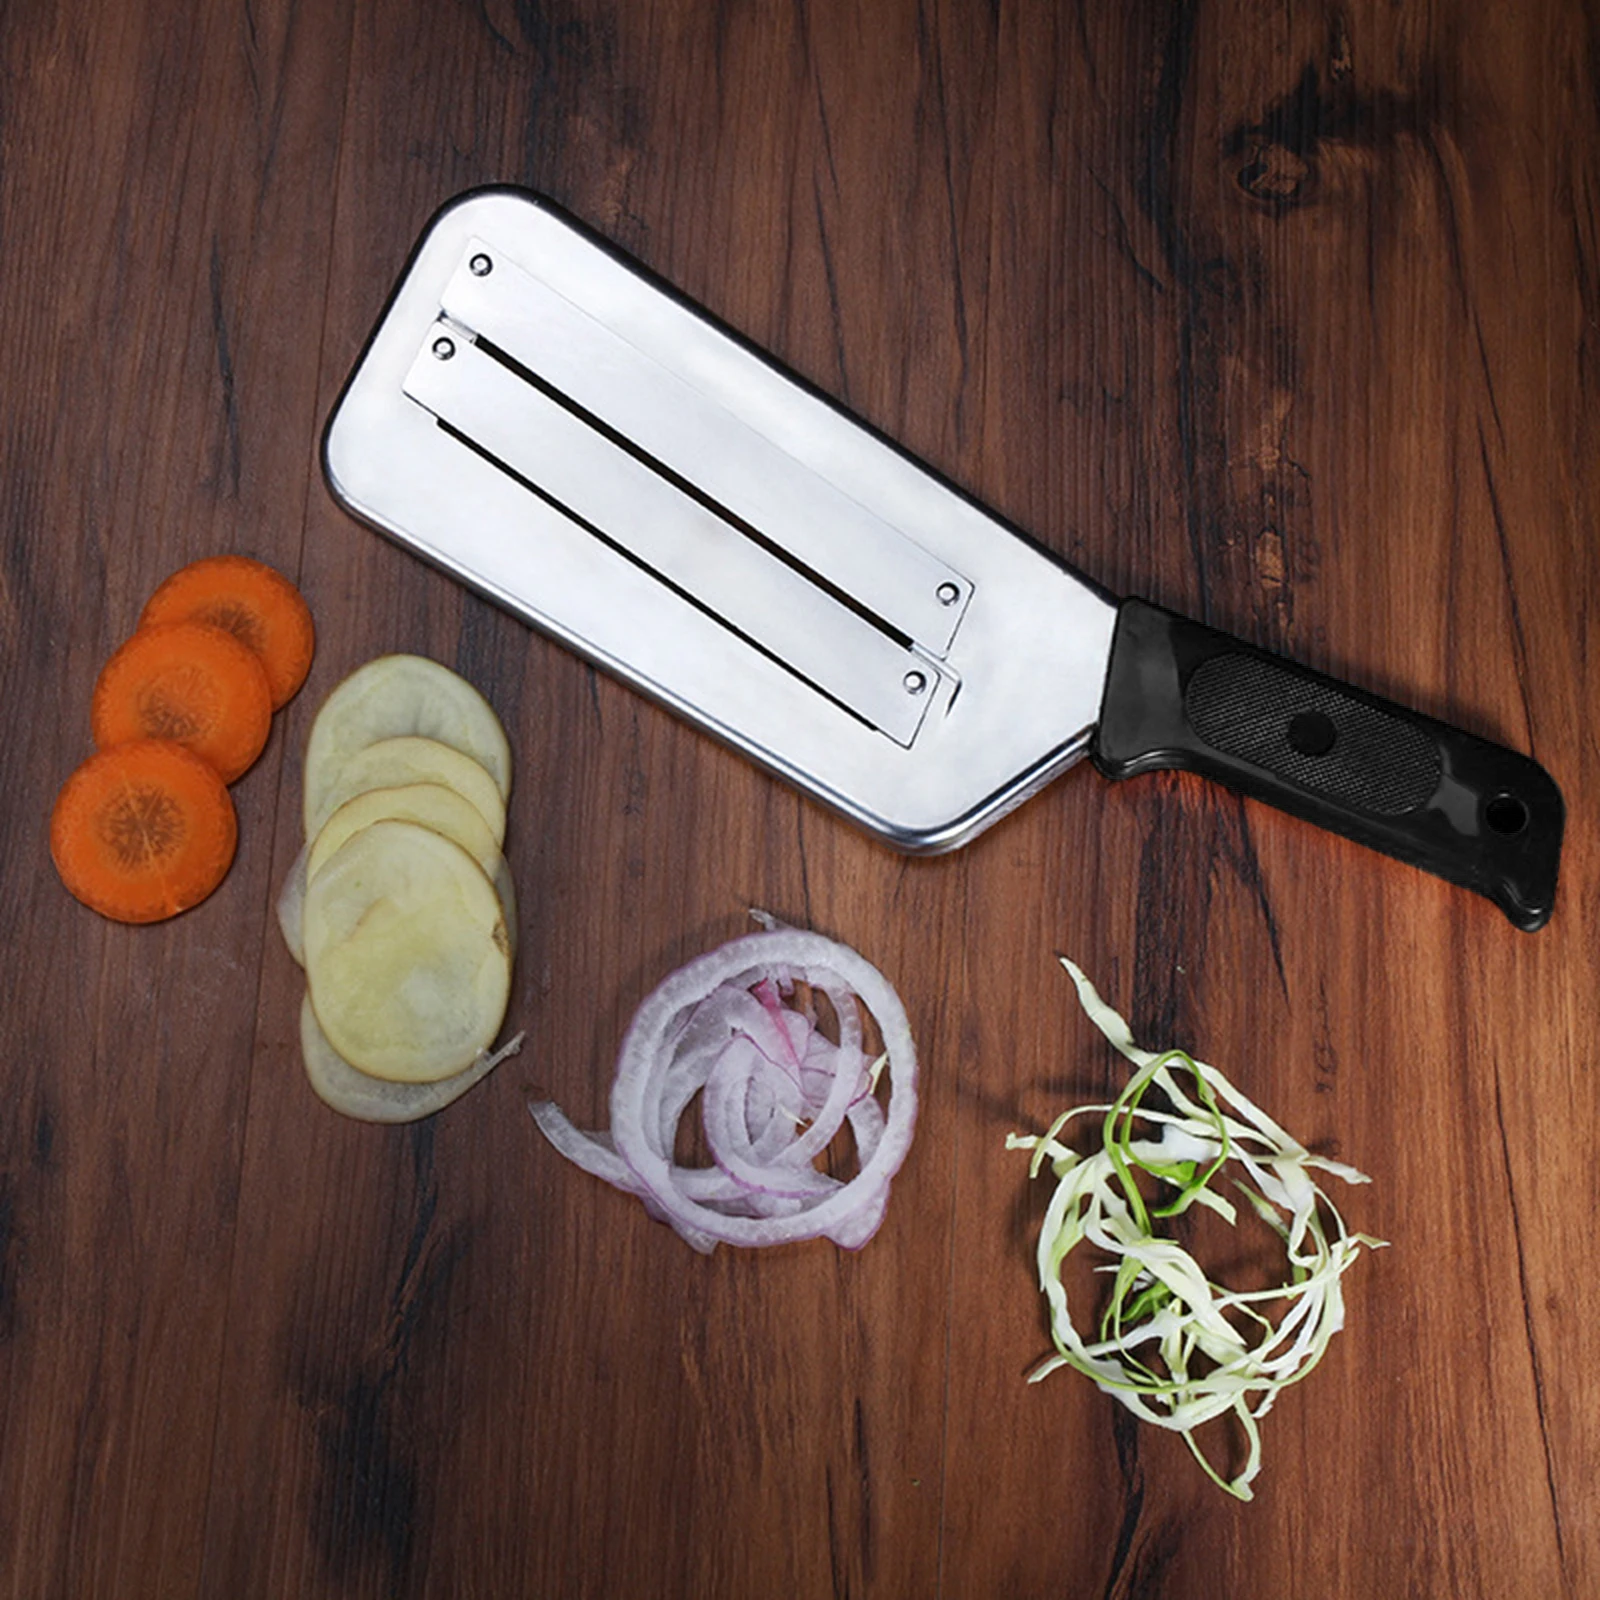 Metal Vegetable Slicer Stainless Steel Chopper Hand Held for Cabbage Tomato Vegetable  Chopper Stainless Steel Manual